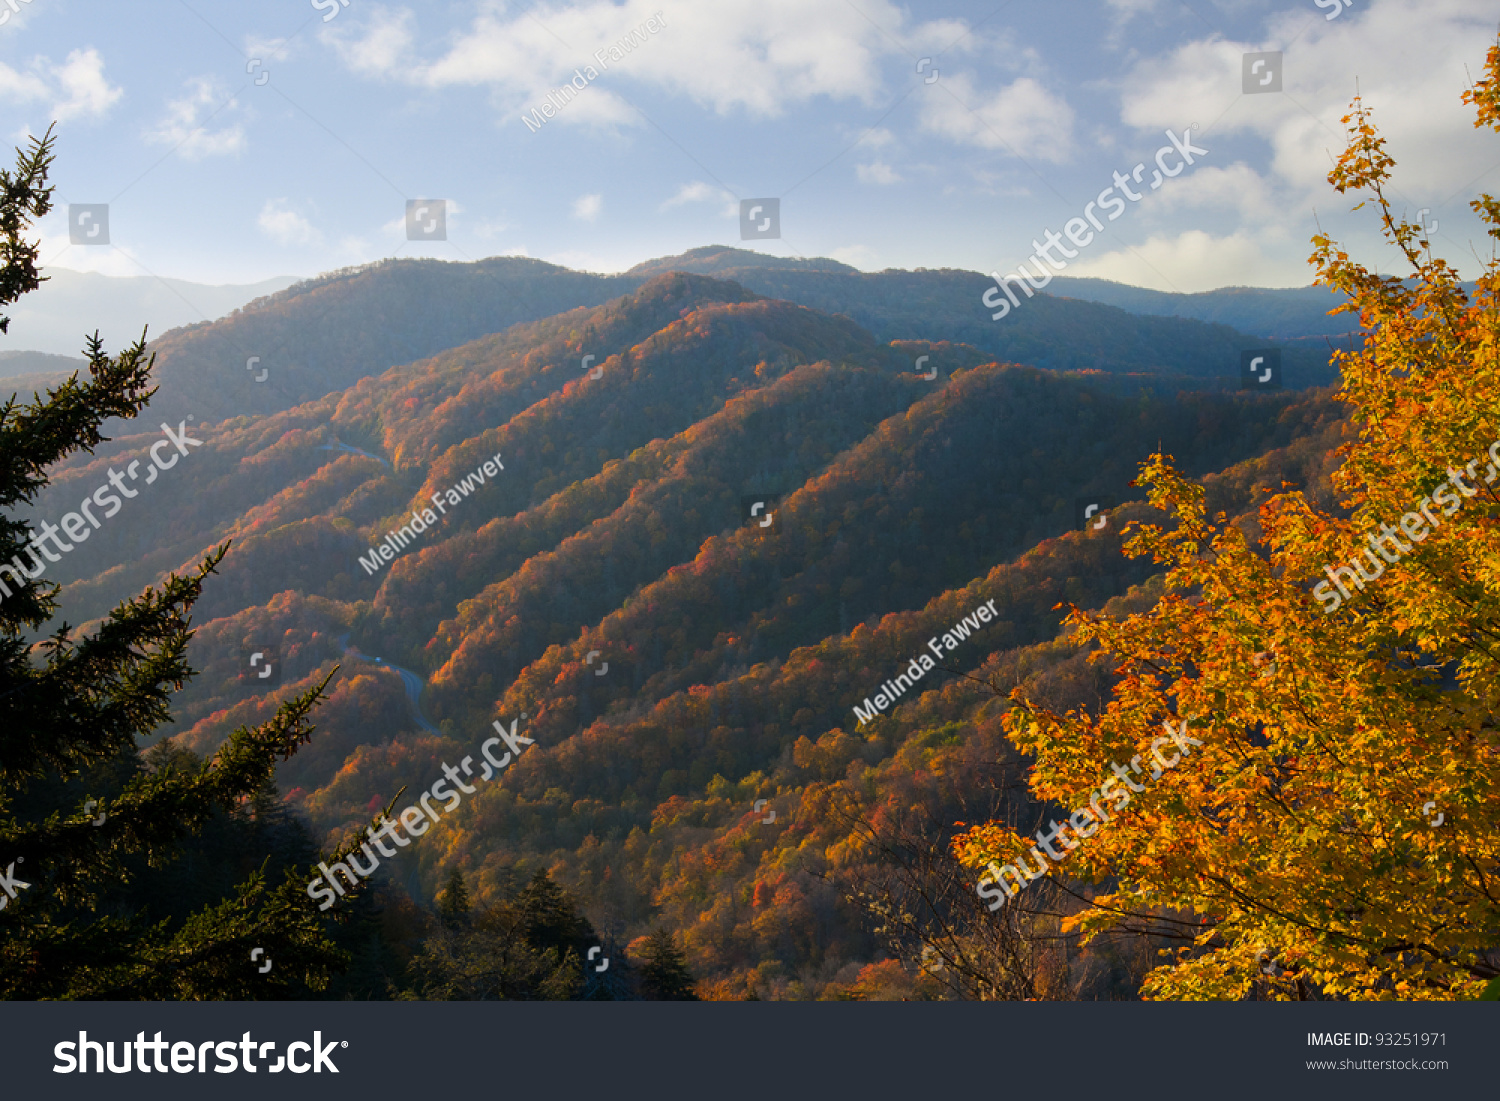 Newfound Gap Great Smoky Mountains National Park Stock Photo 93251971